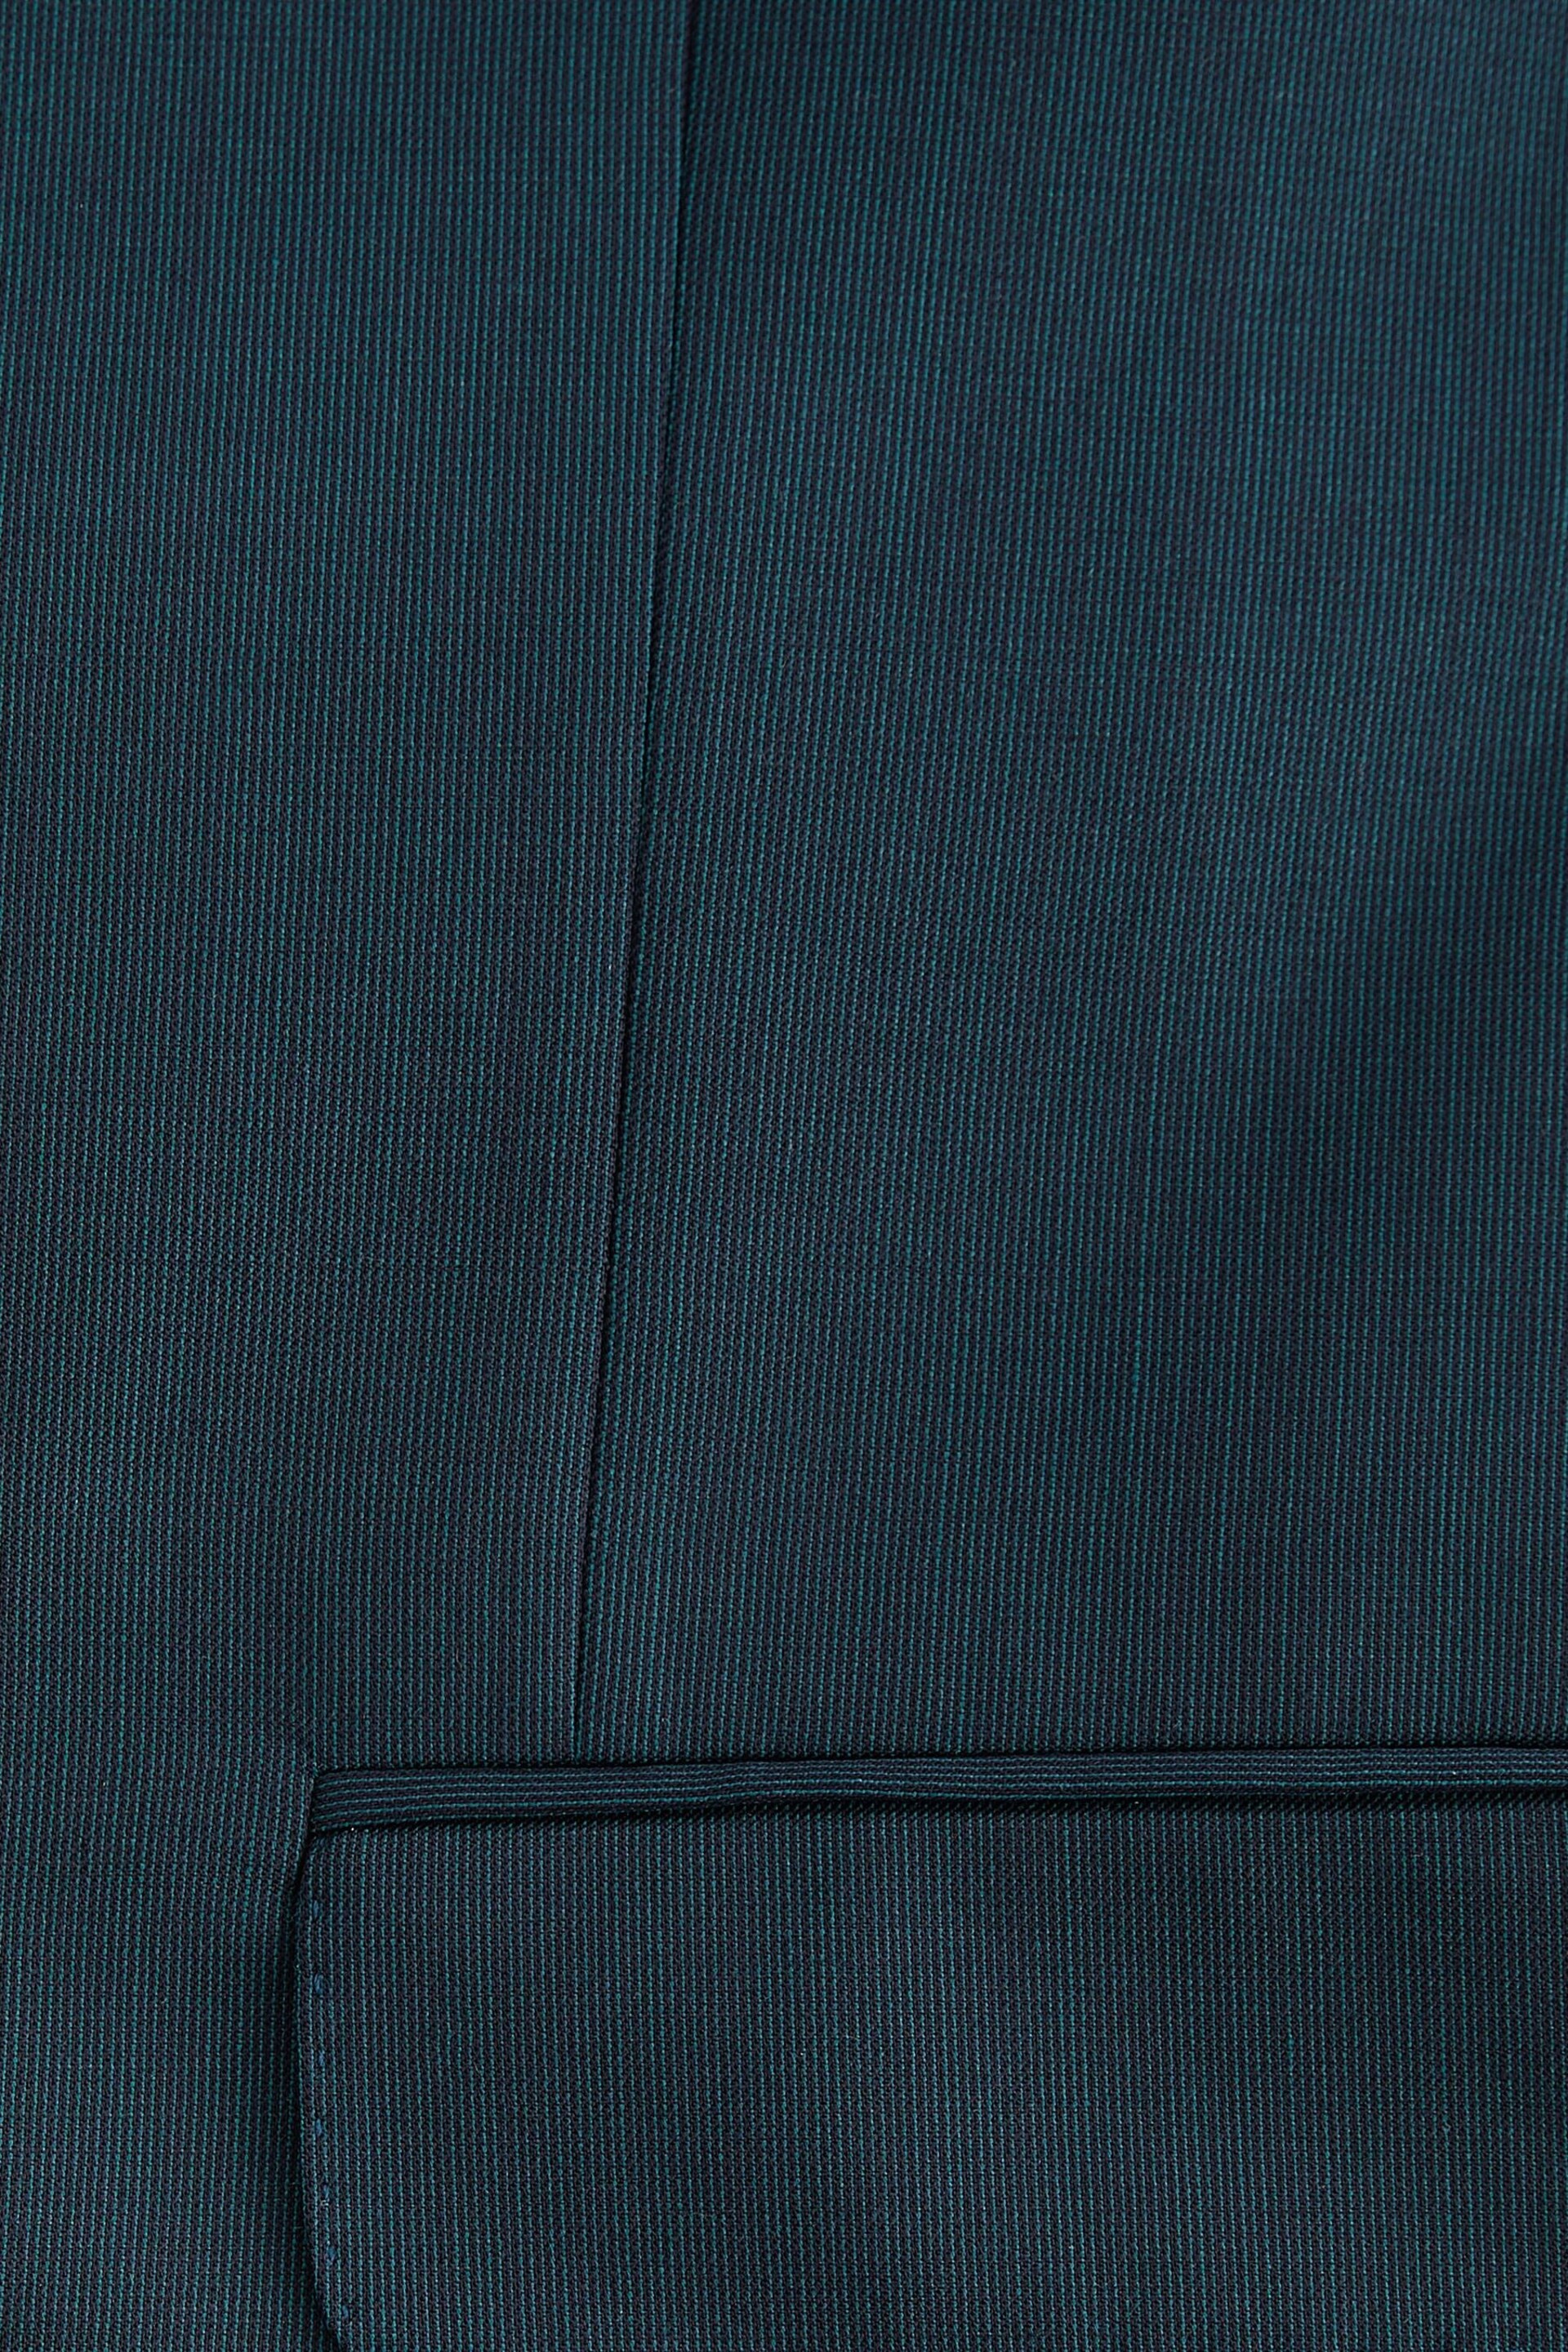 Teal Blue Wool Blend Suit Waistcoat - Image 9 of 10